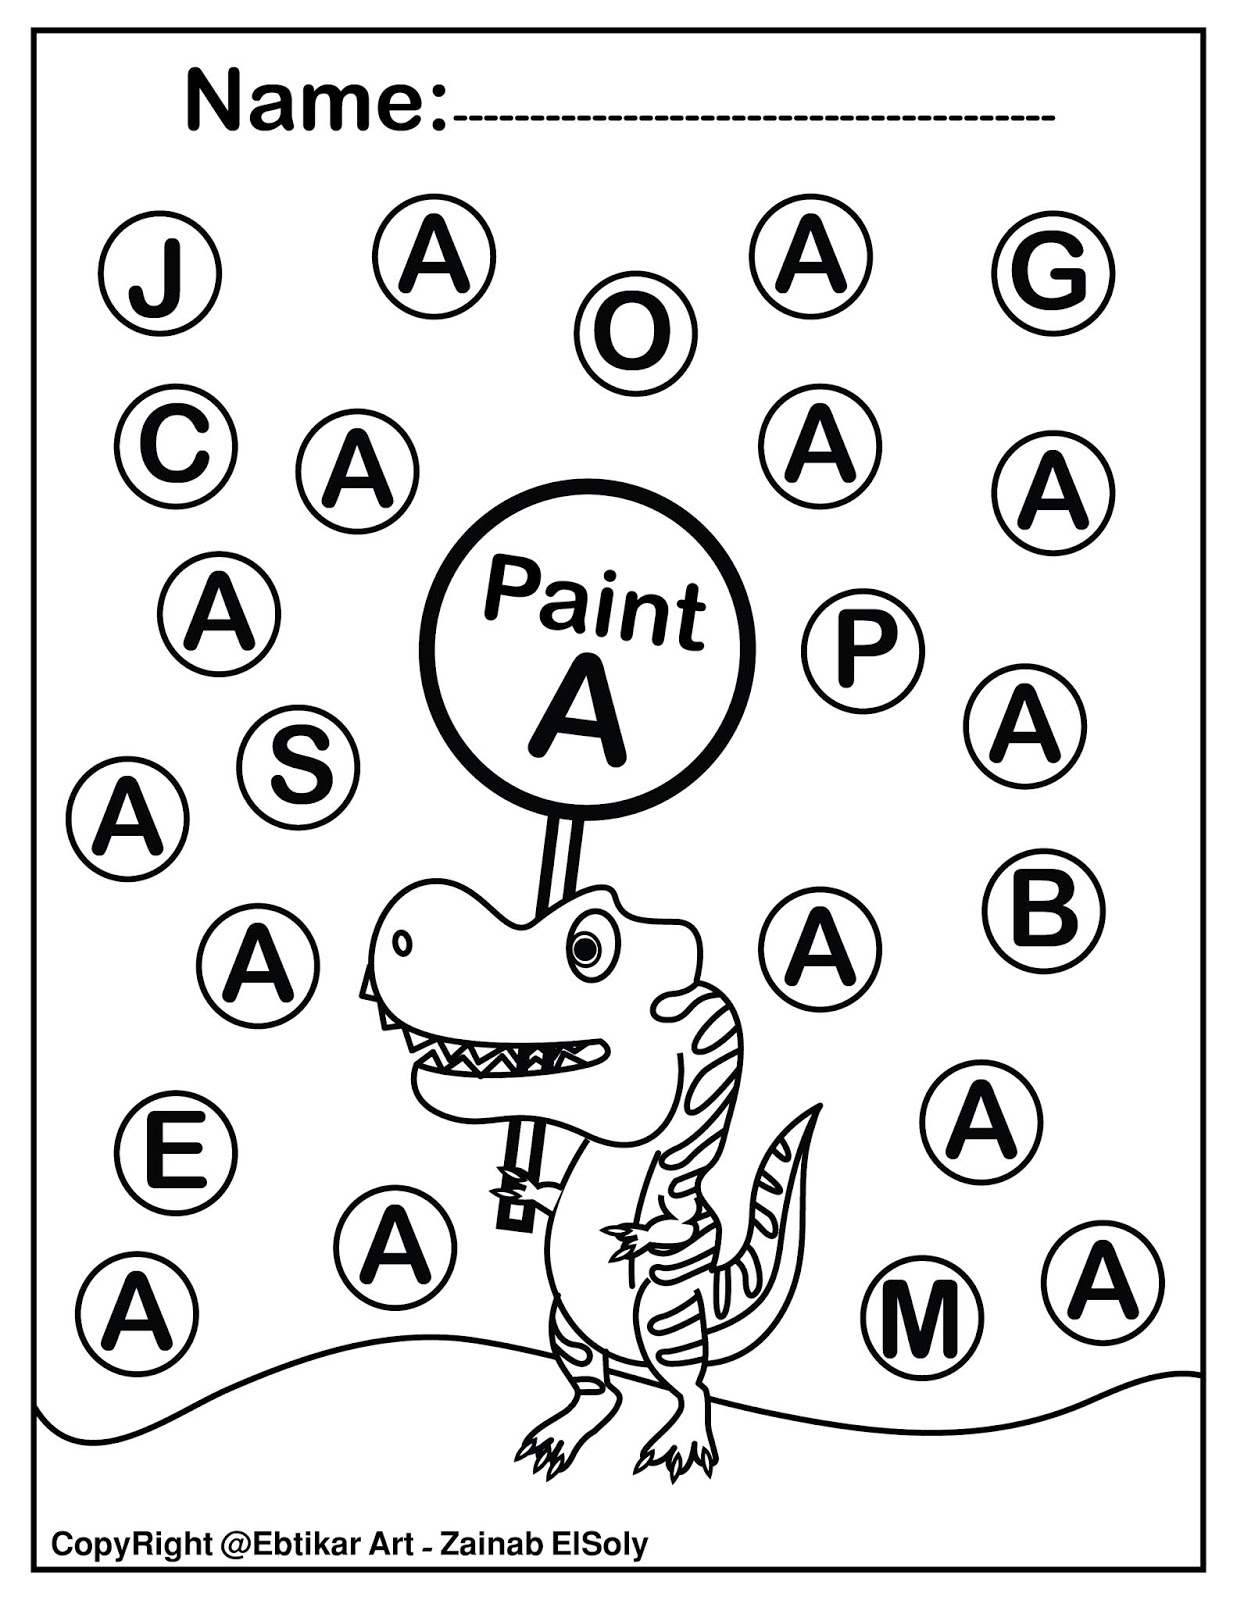 Set of ABC Dinosaur Trex Activity Paint a Dot Preschool Coloring sheets